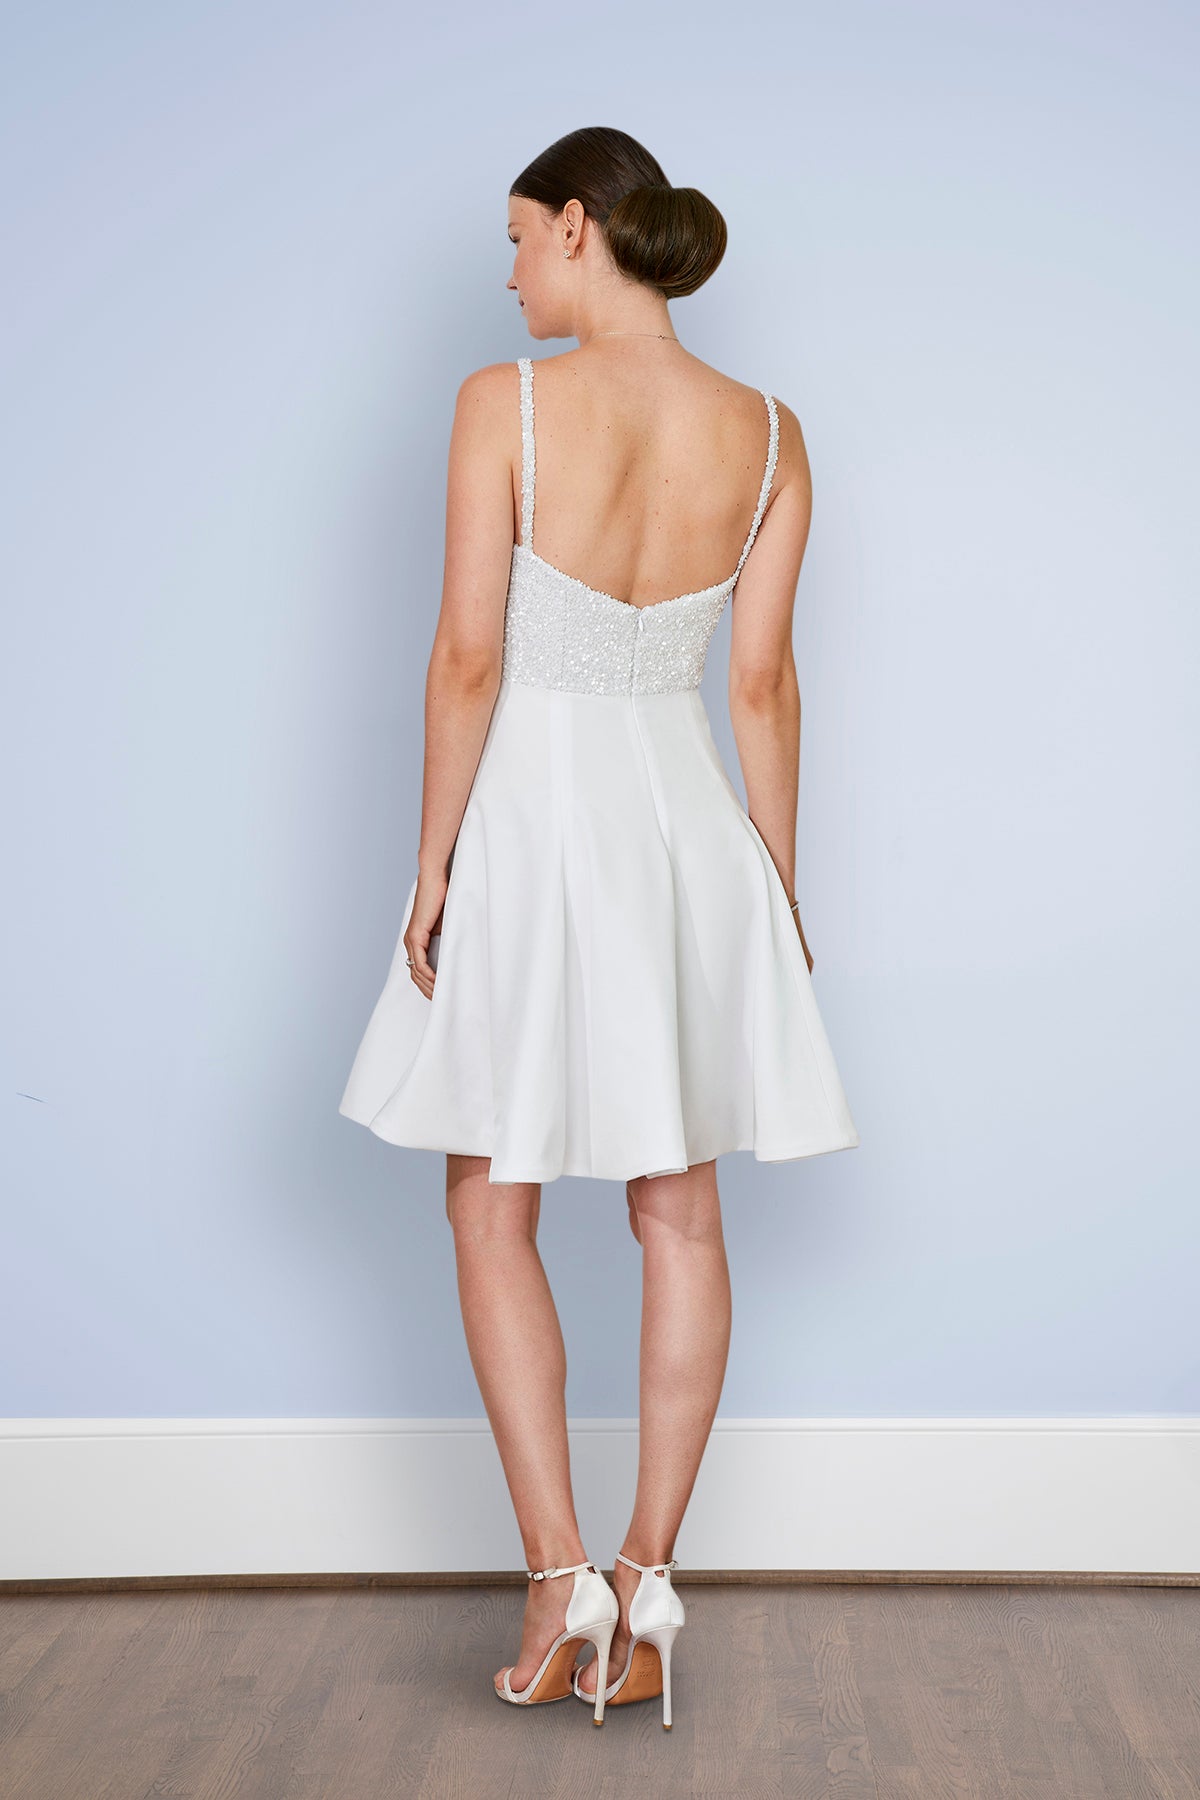 short white sparkly dress